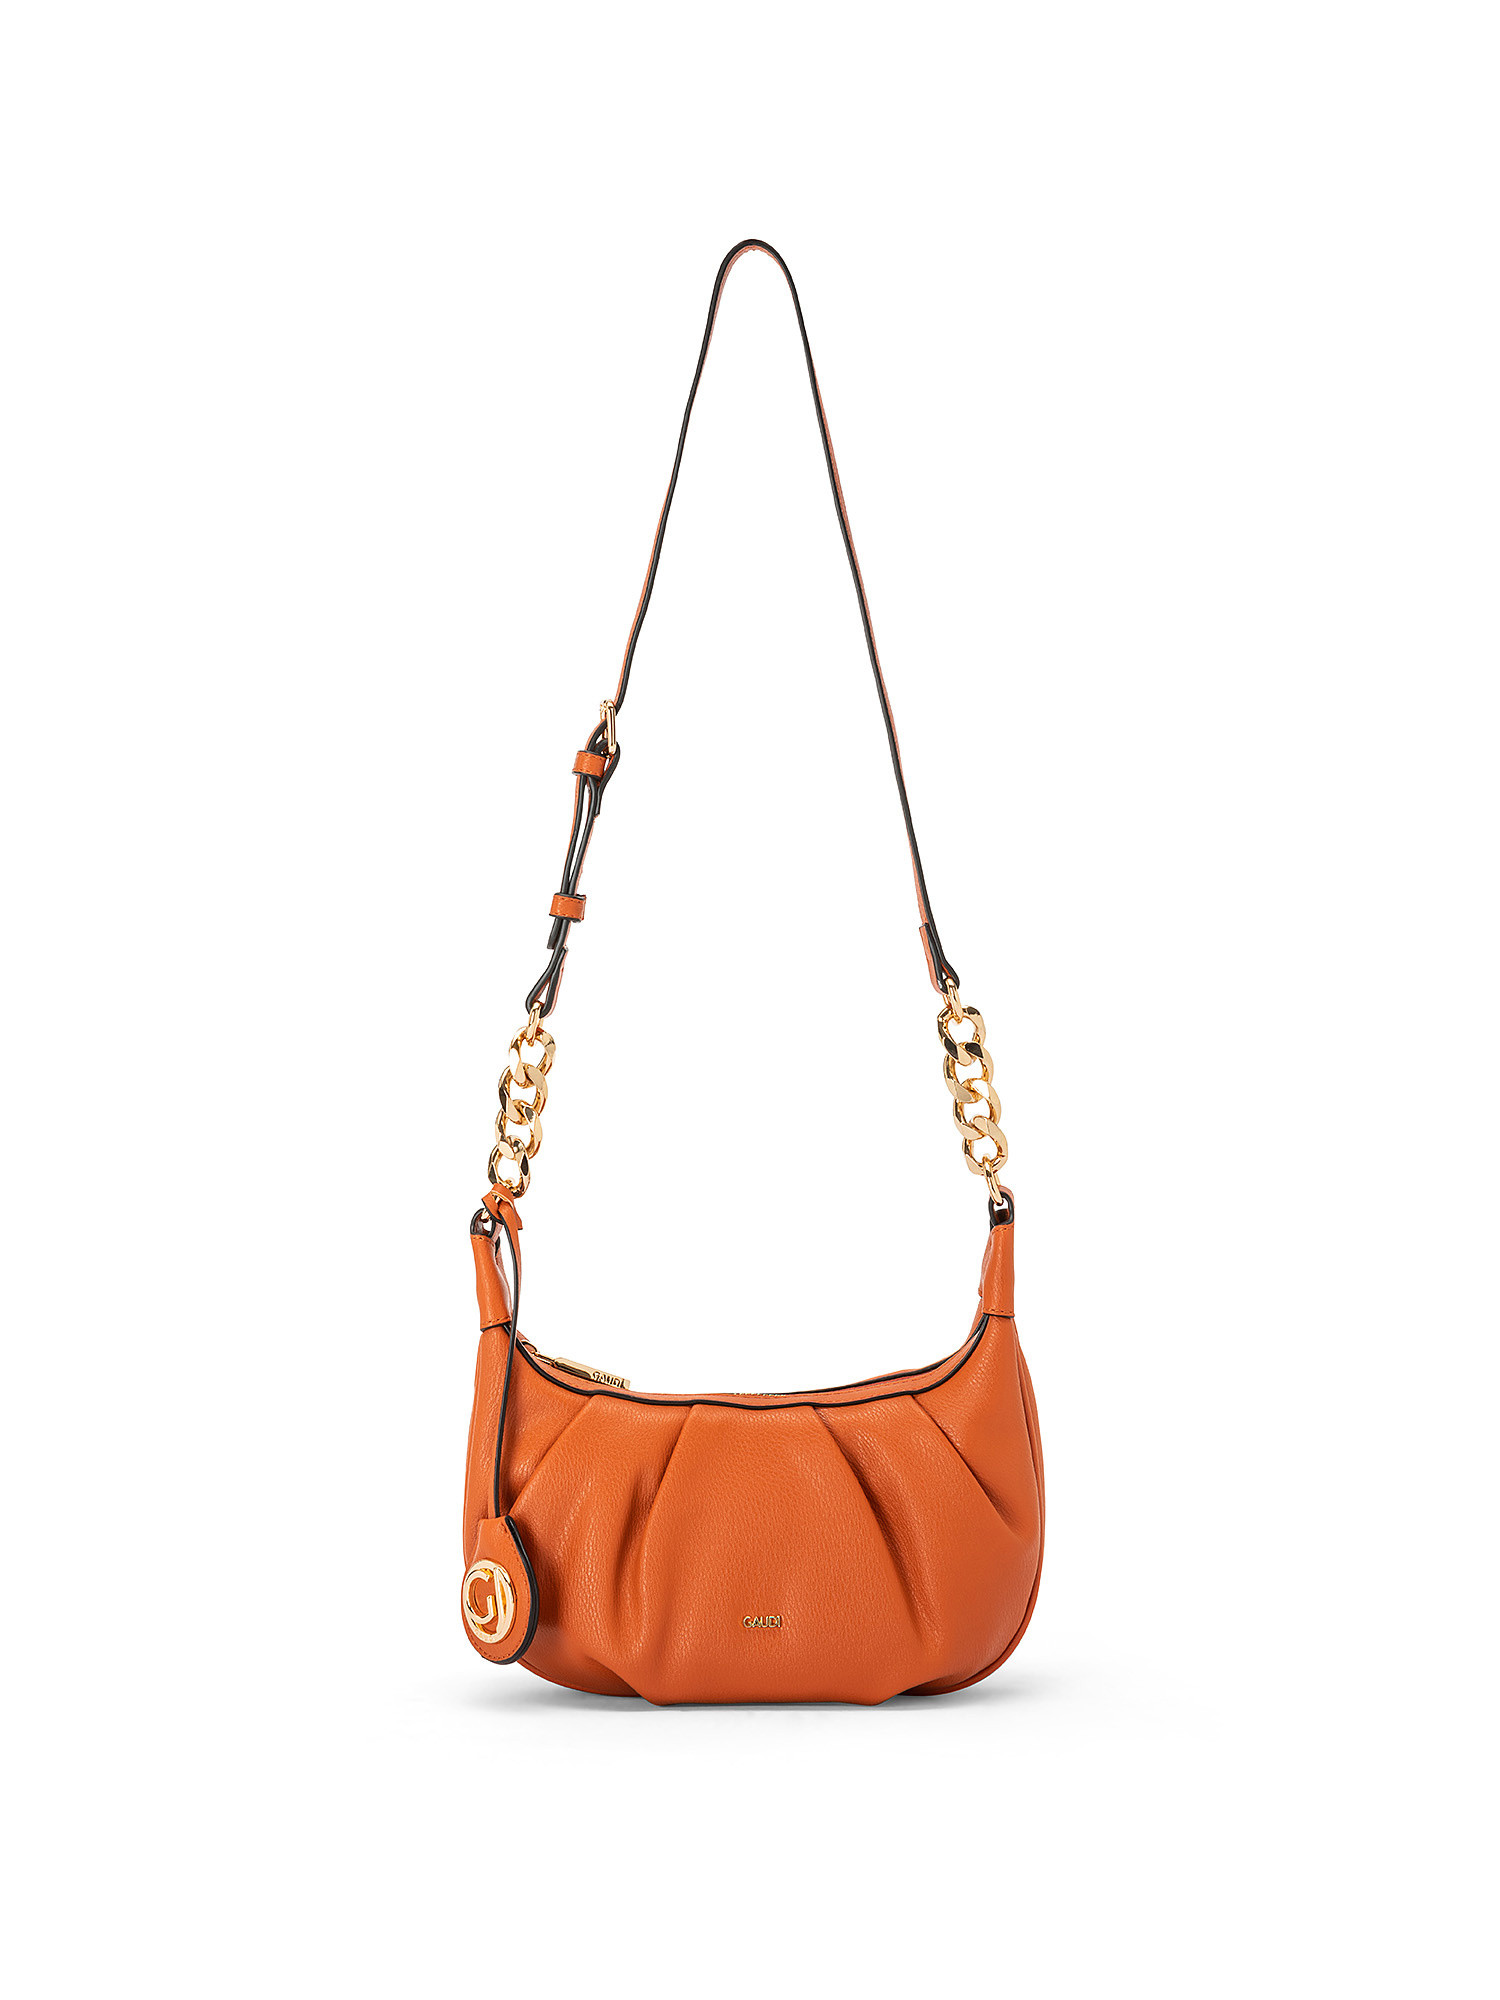 Gaudì - Iris shoulder bag, Dark Orange, large image number 0